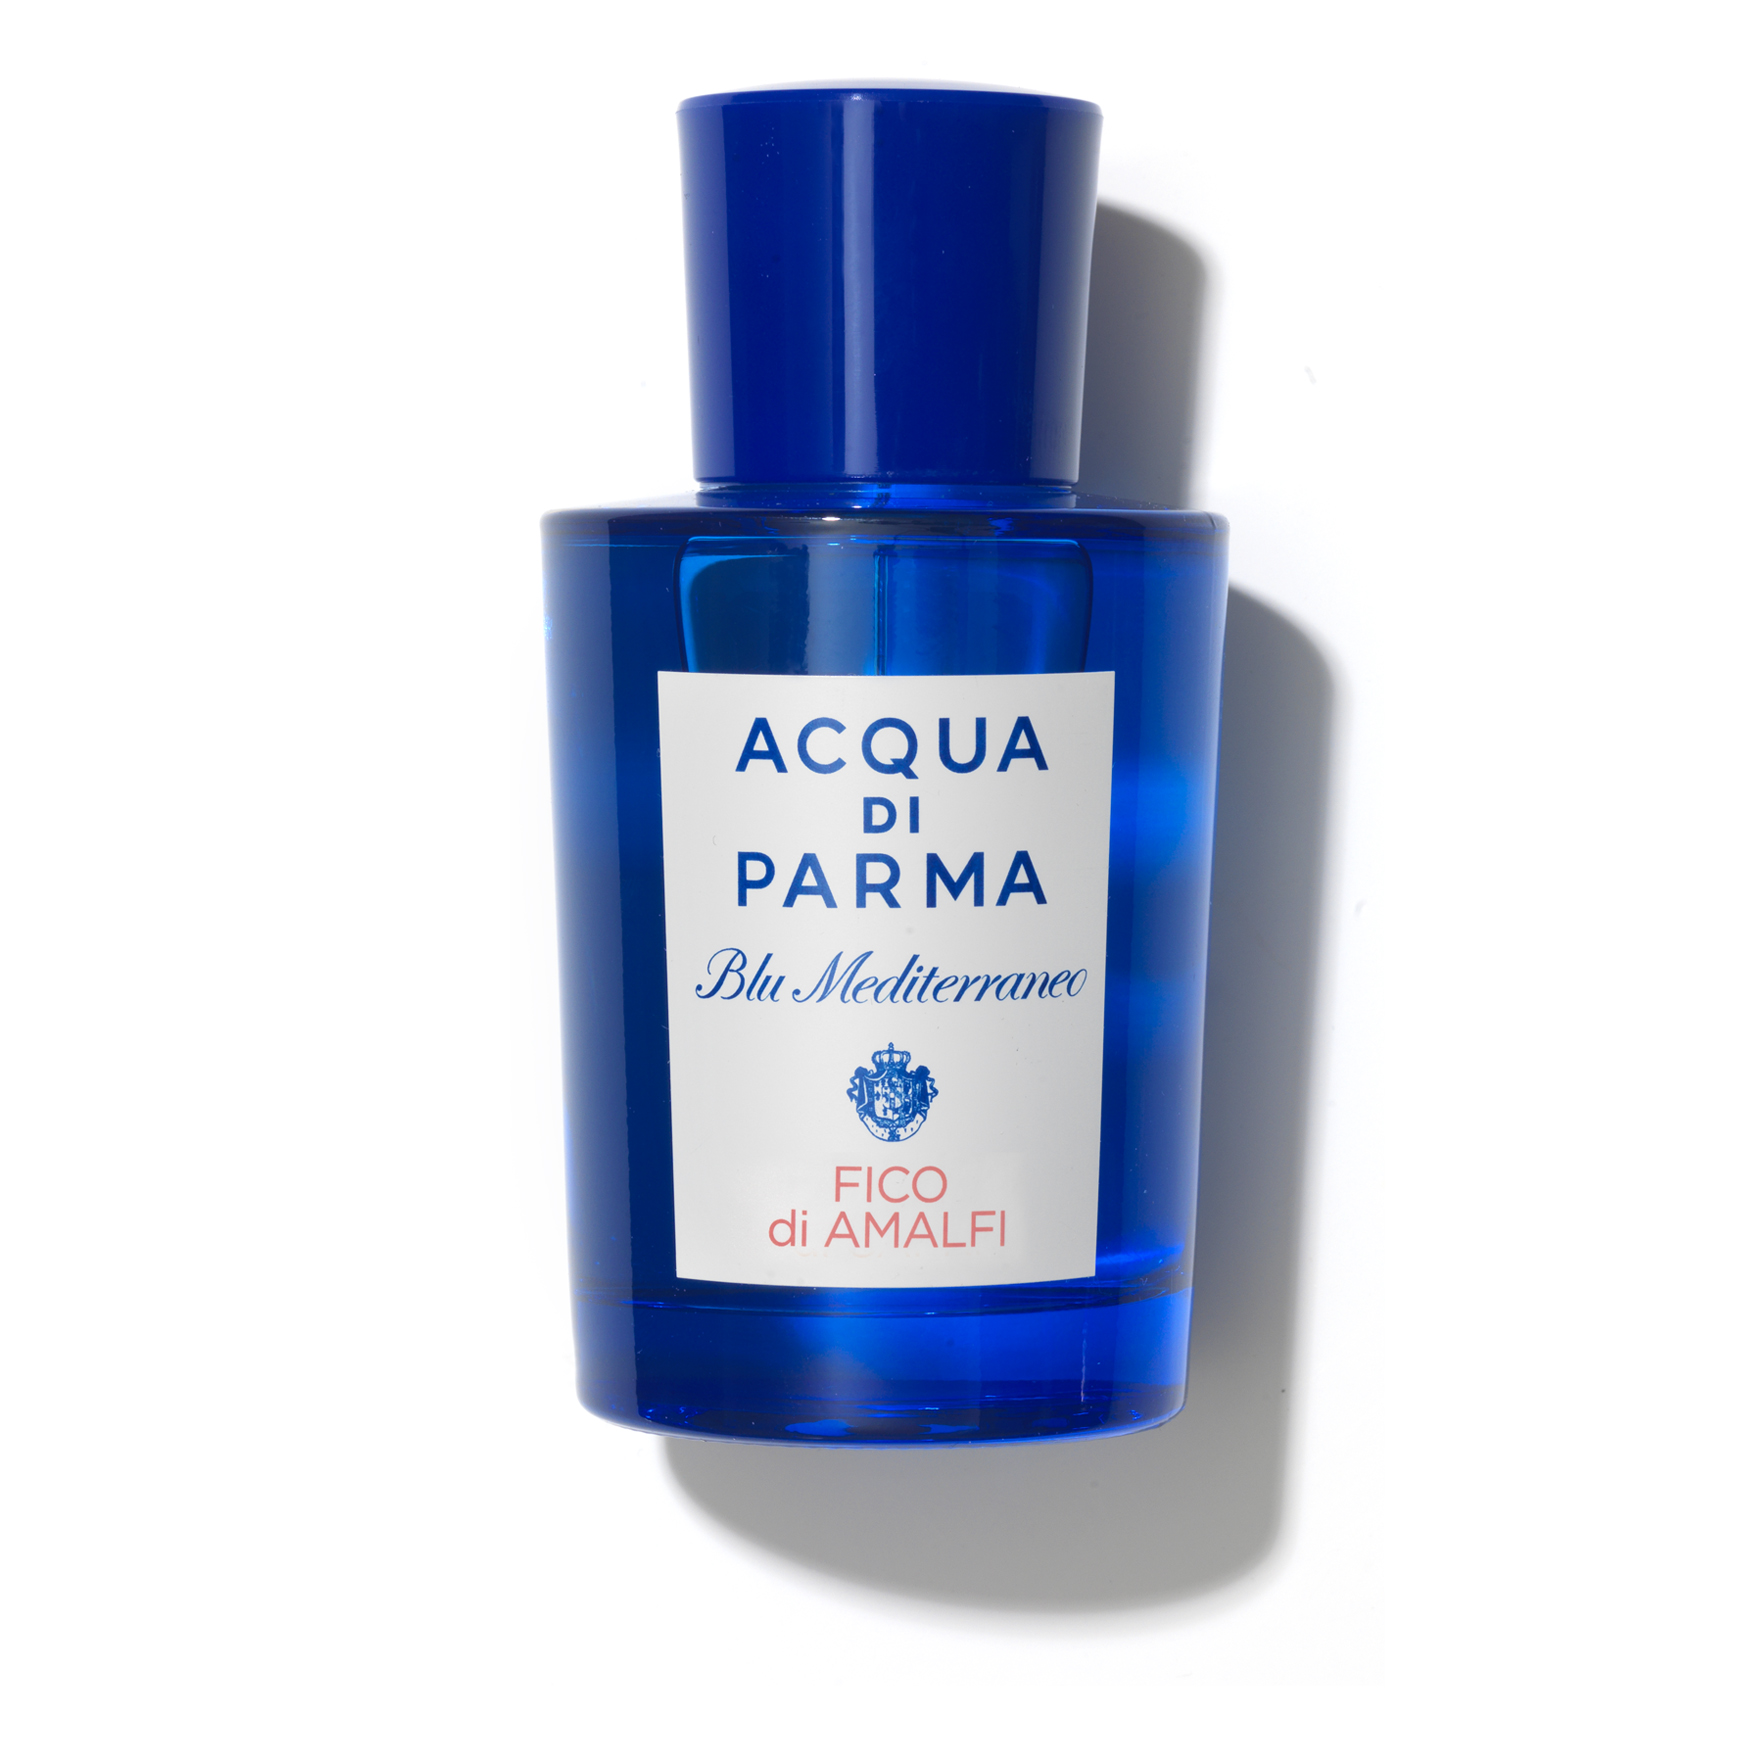 Acqua di parma capri. Духи Aqua de Parma. ПЕВА ди Парма. Aqua de Parma голубая. Аква ди Парма Куерча.